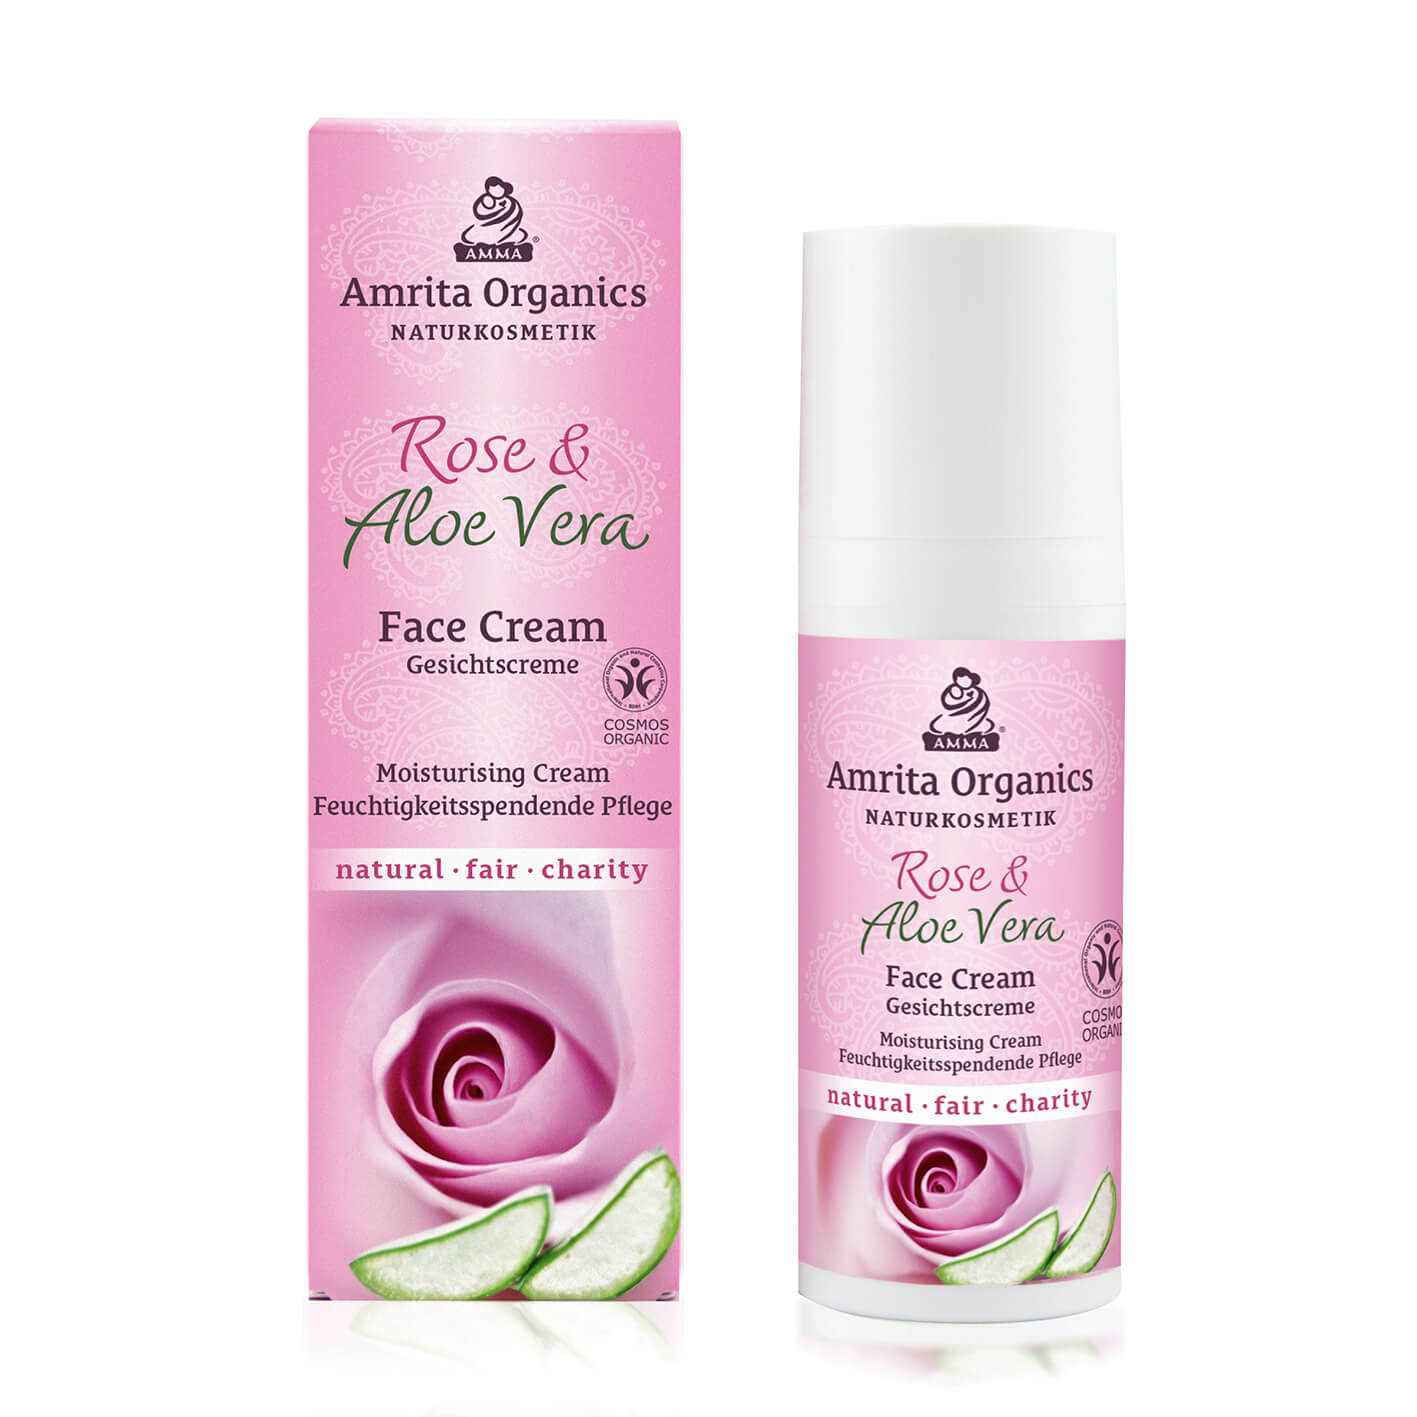 Rose & Aloe Vera Face Cream